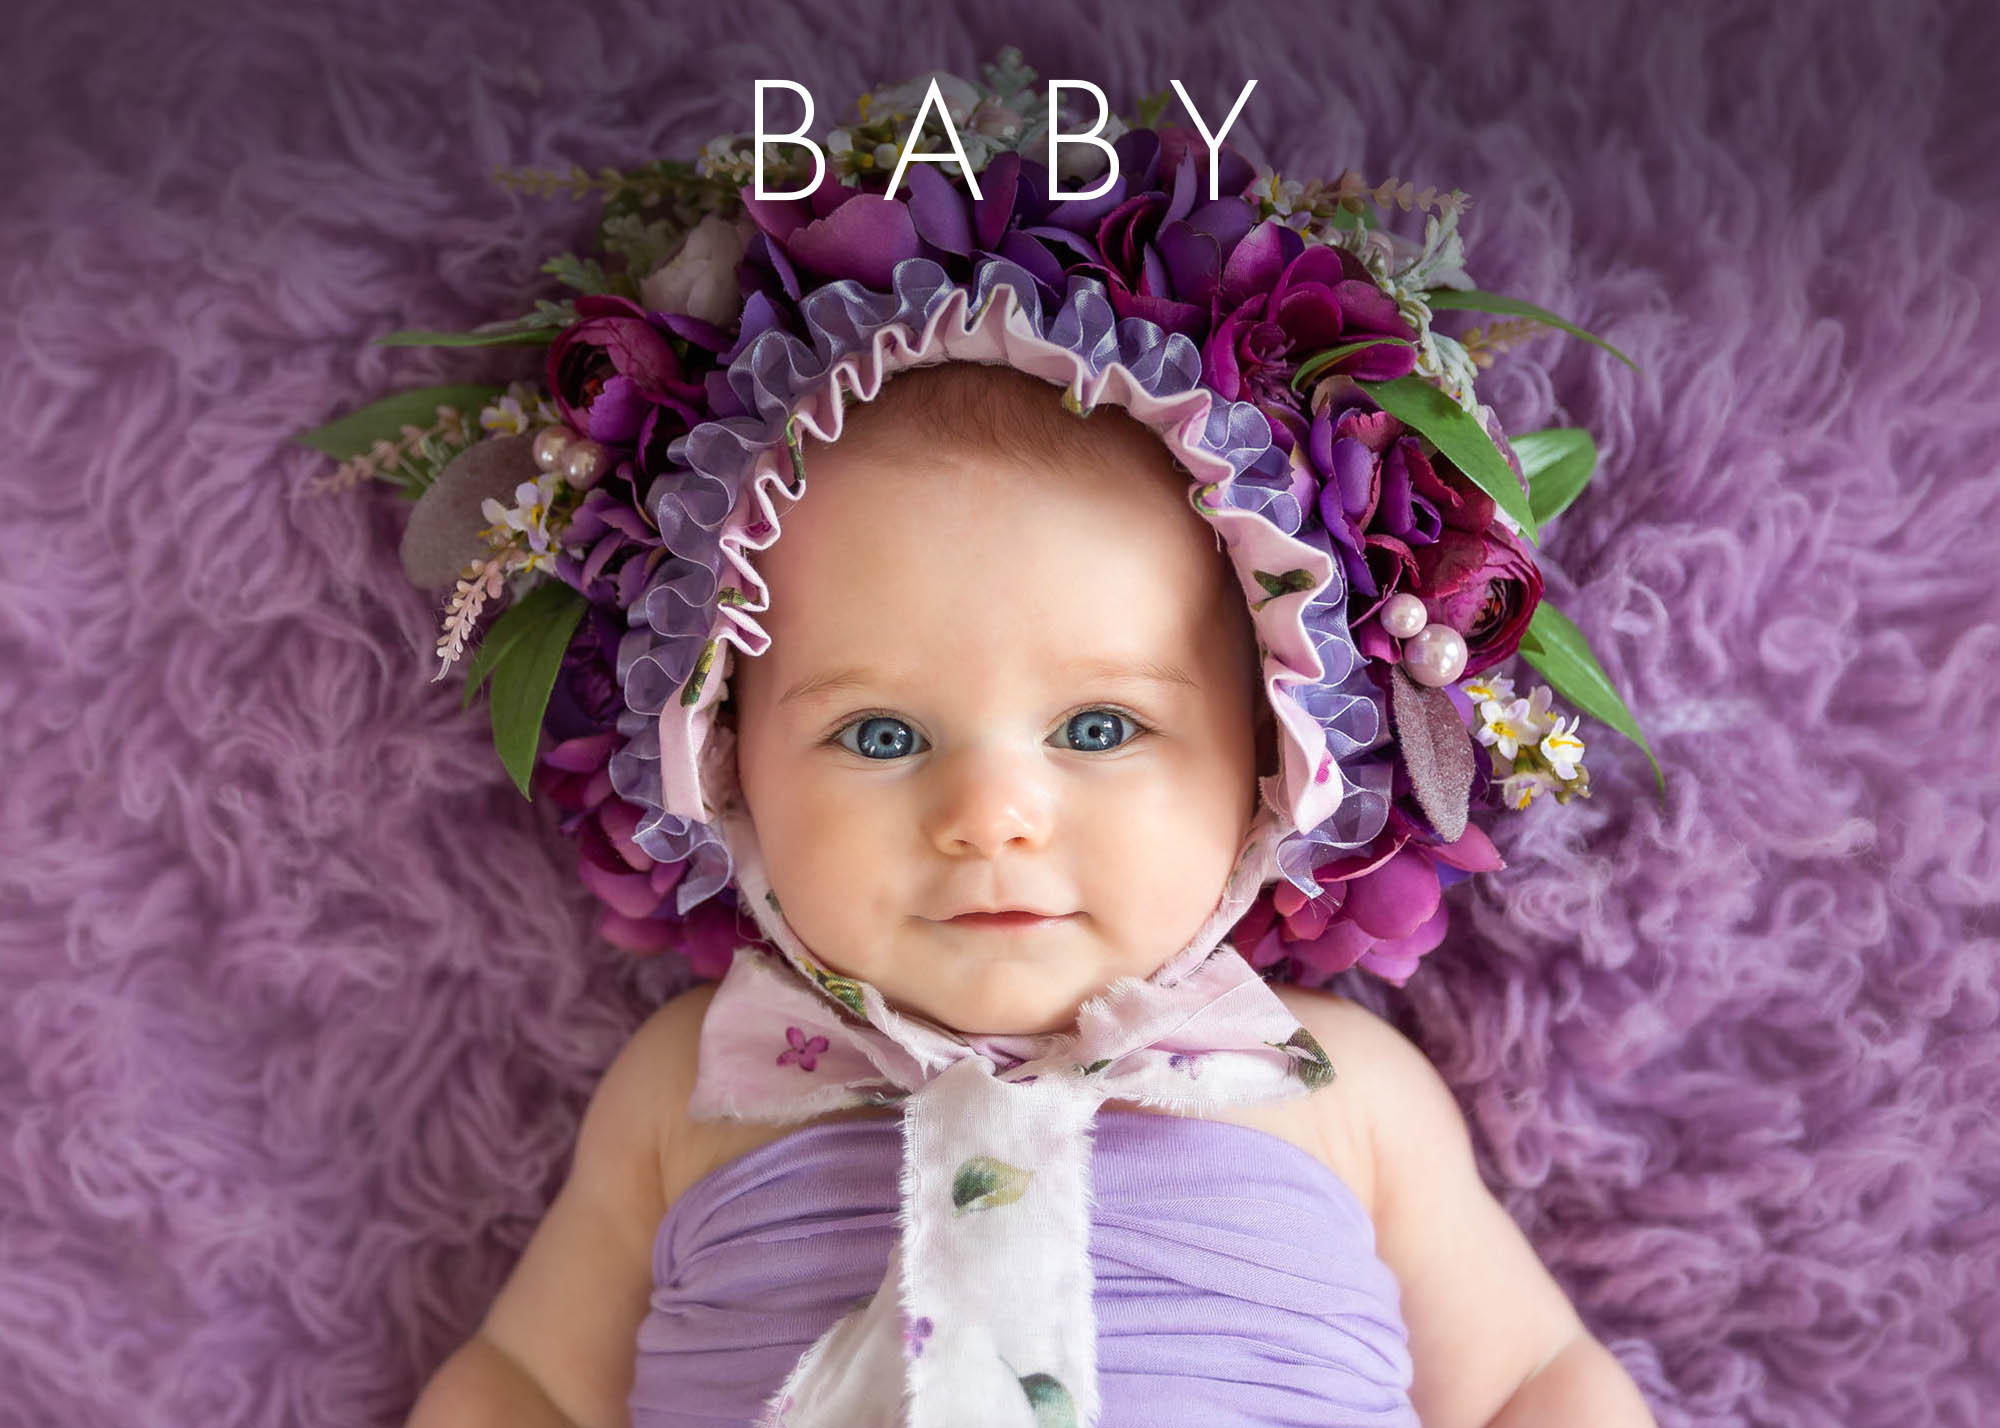 Newborn Photographer, a baby girl wears a decorative flower hat on a fluffy purple blanket